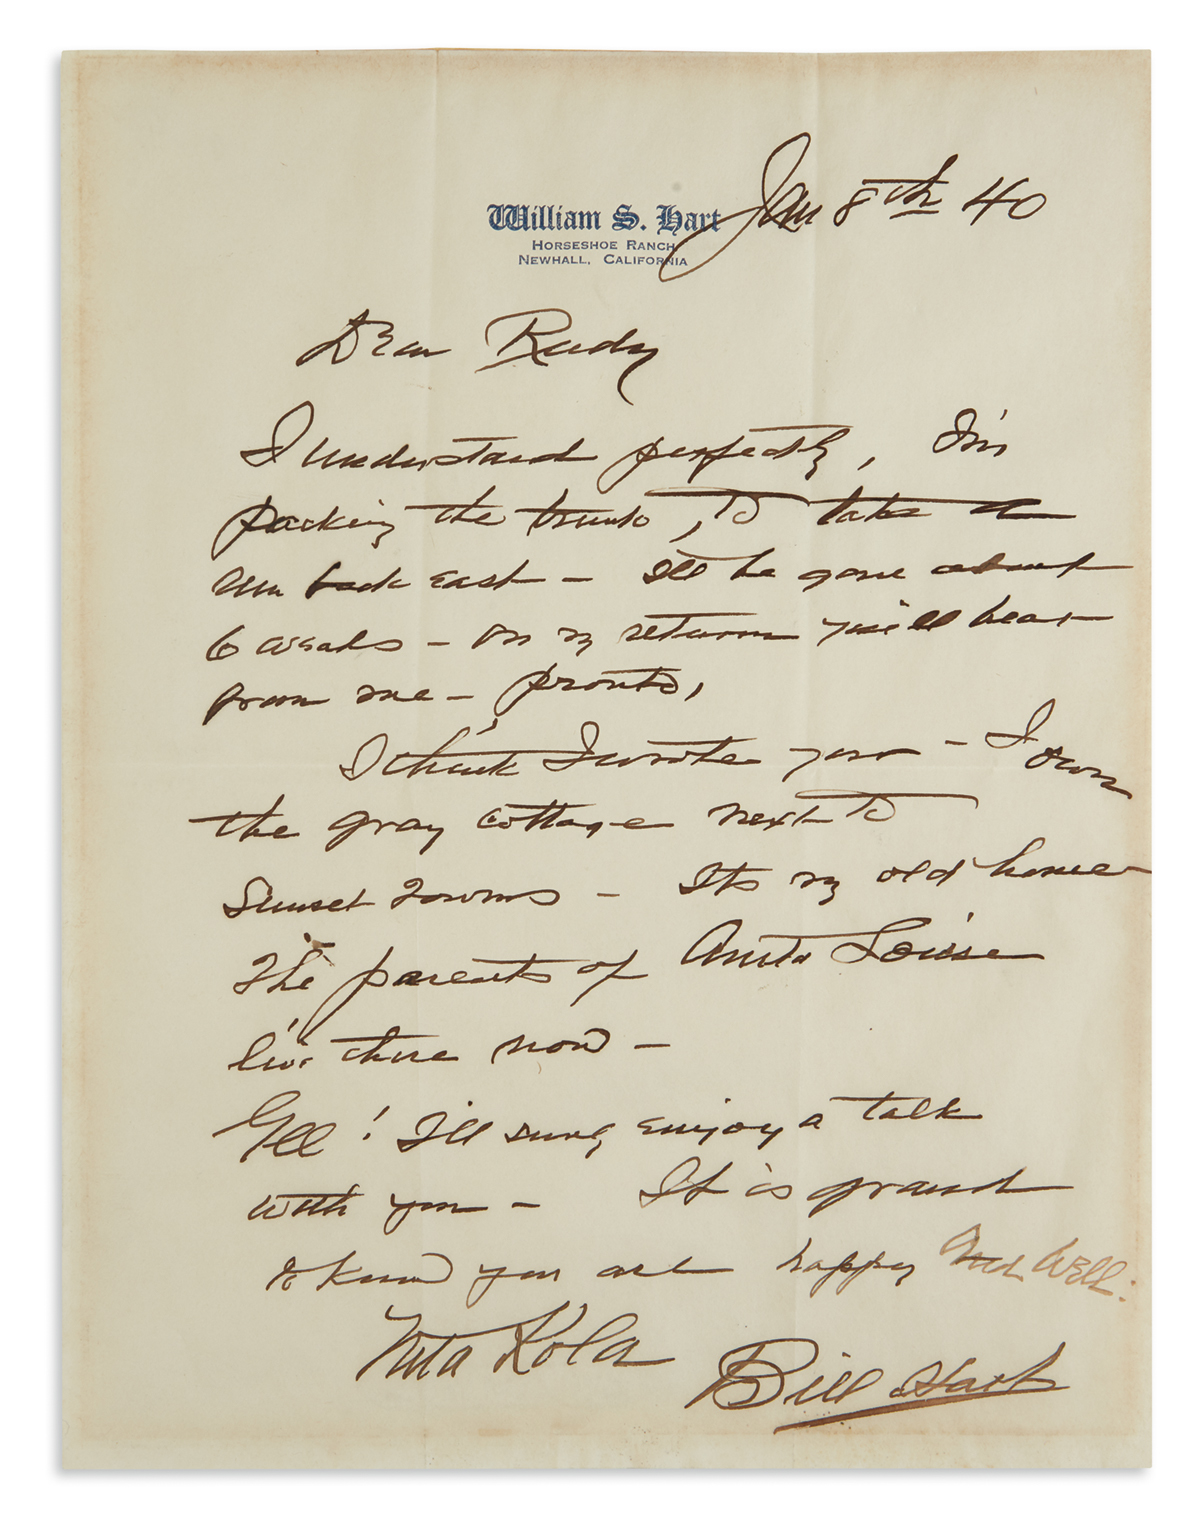 WILLIAM S. HART. Autograph Letter Signed, Nita Kola / Bill Hart, to Rudy Vallée (Dear Rudy), giving travel p...